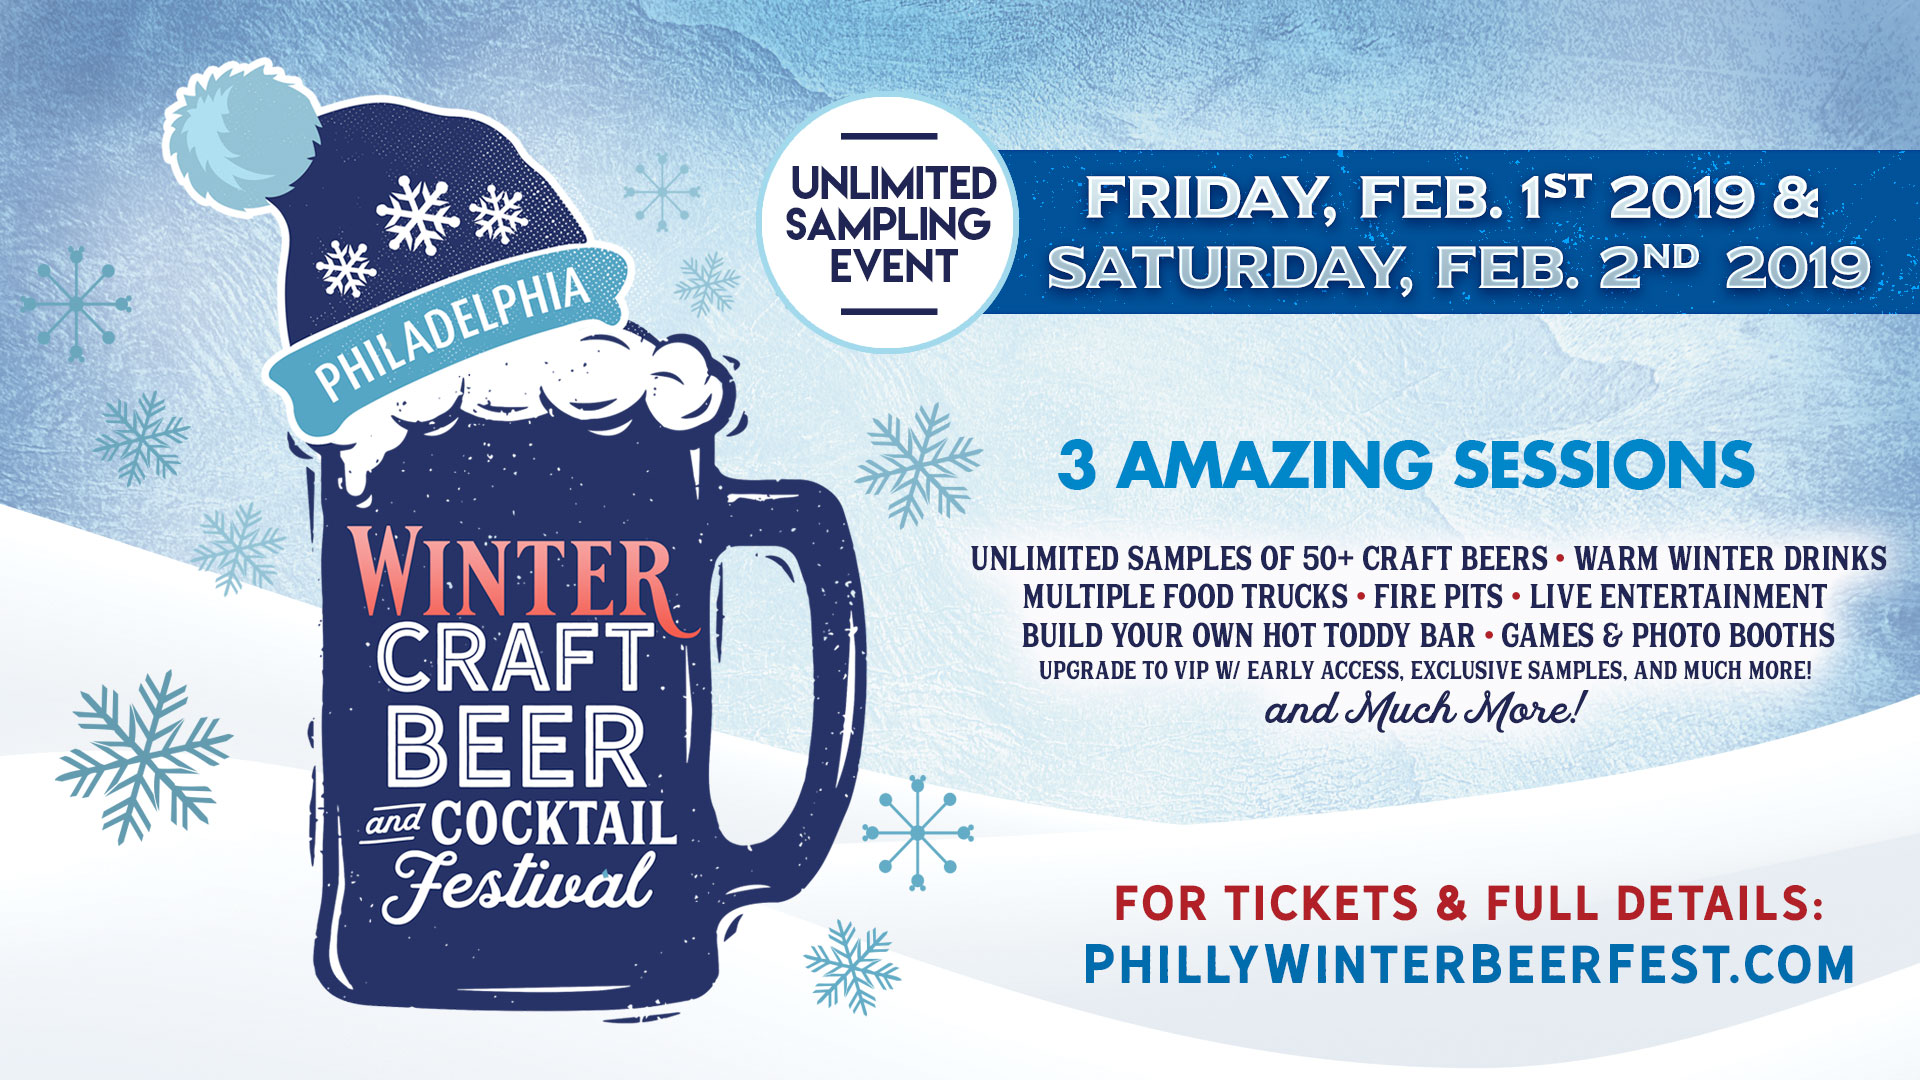 The Philadelphia Winter Craft Beer & Cocktail Festival banner image